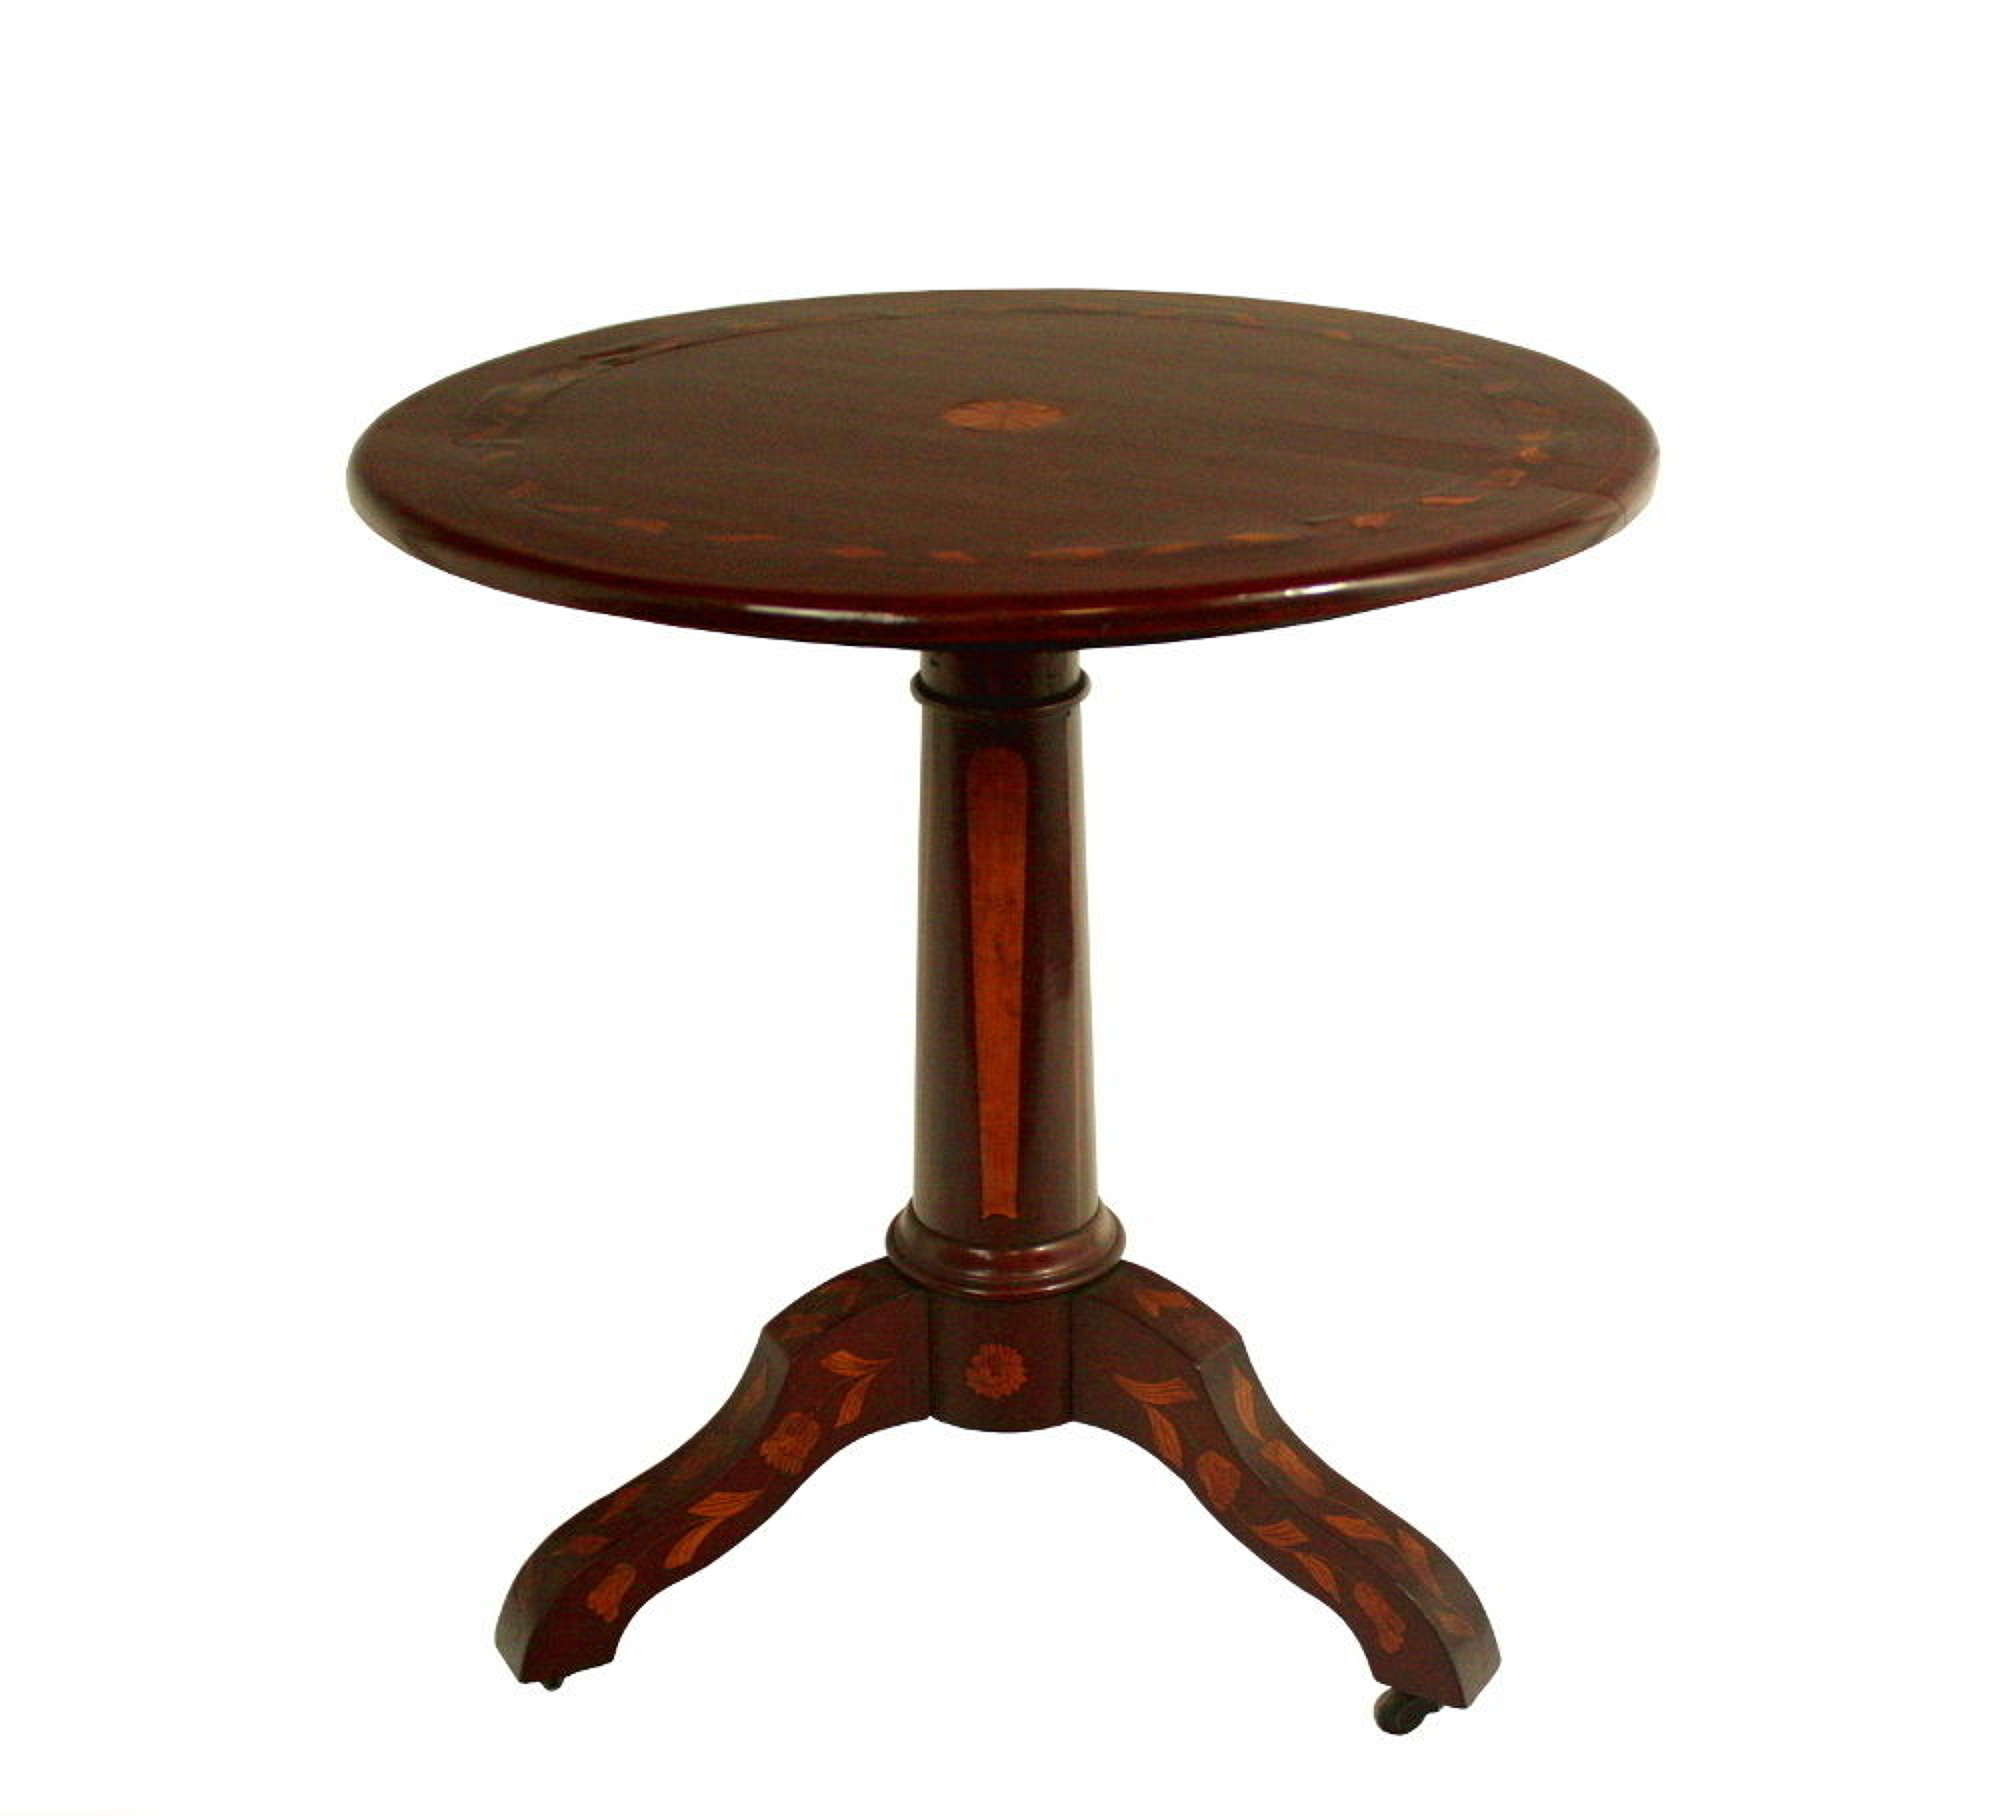 Unusual 19th Century Victorian Inlaid Revolving Circular Table